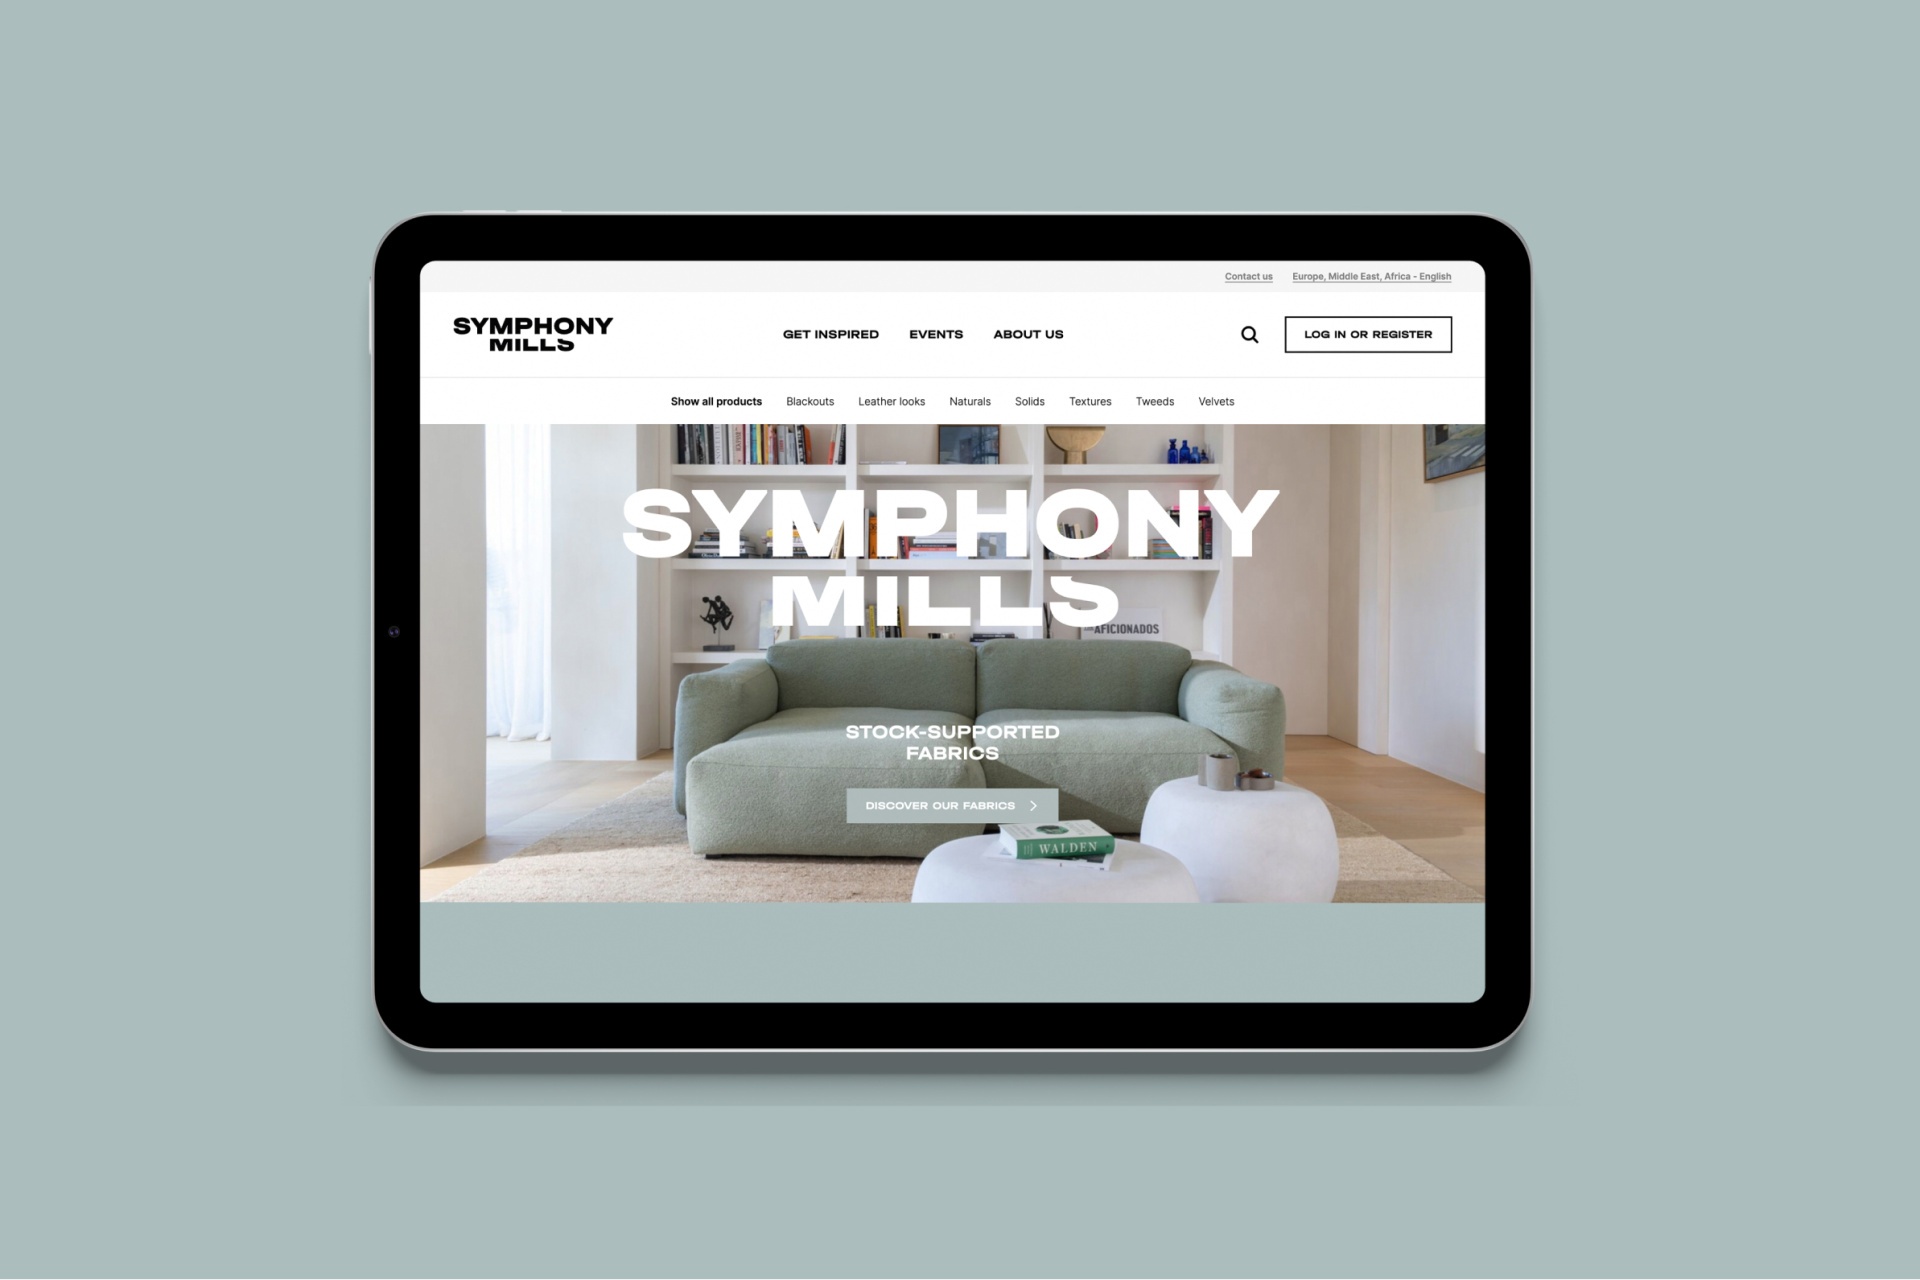 Symphony Mills website on a tablet